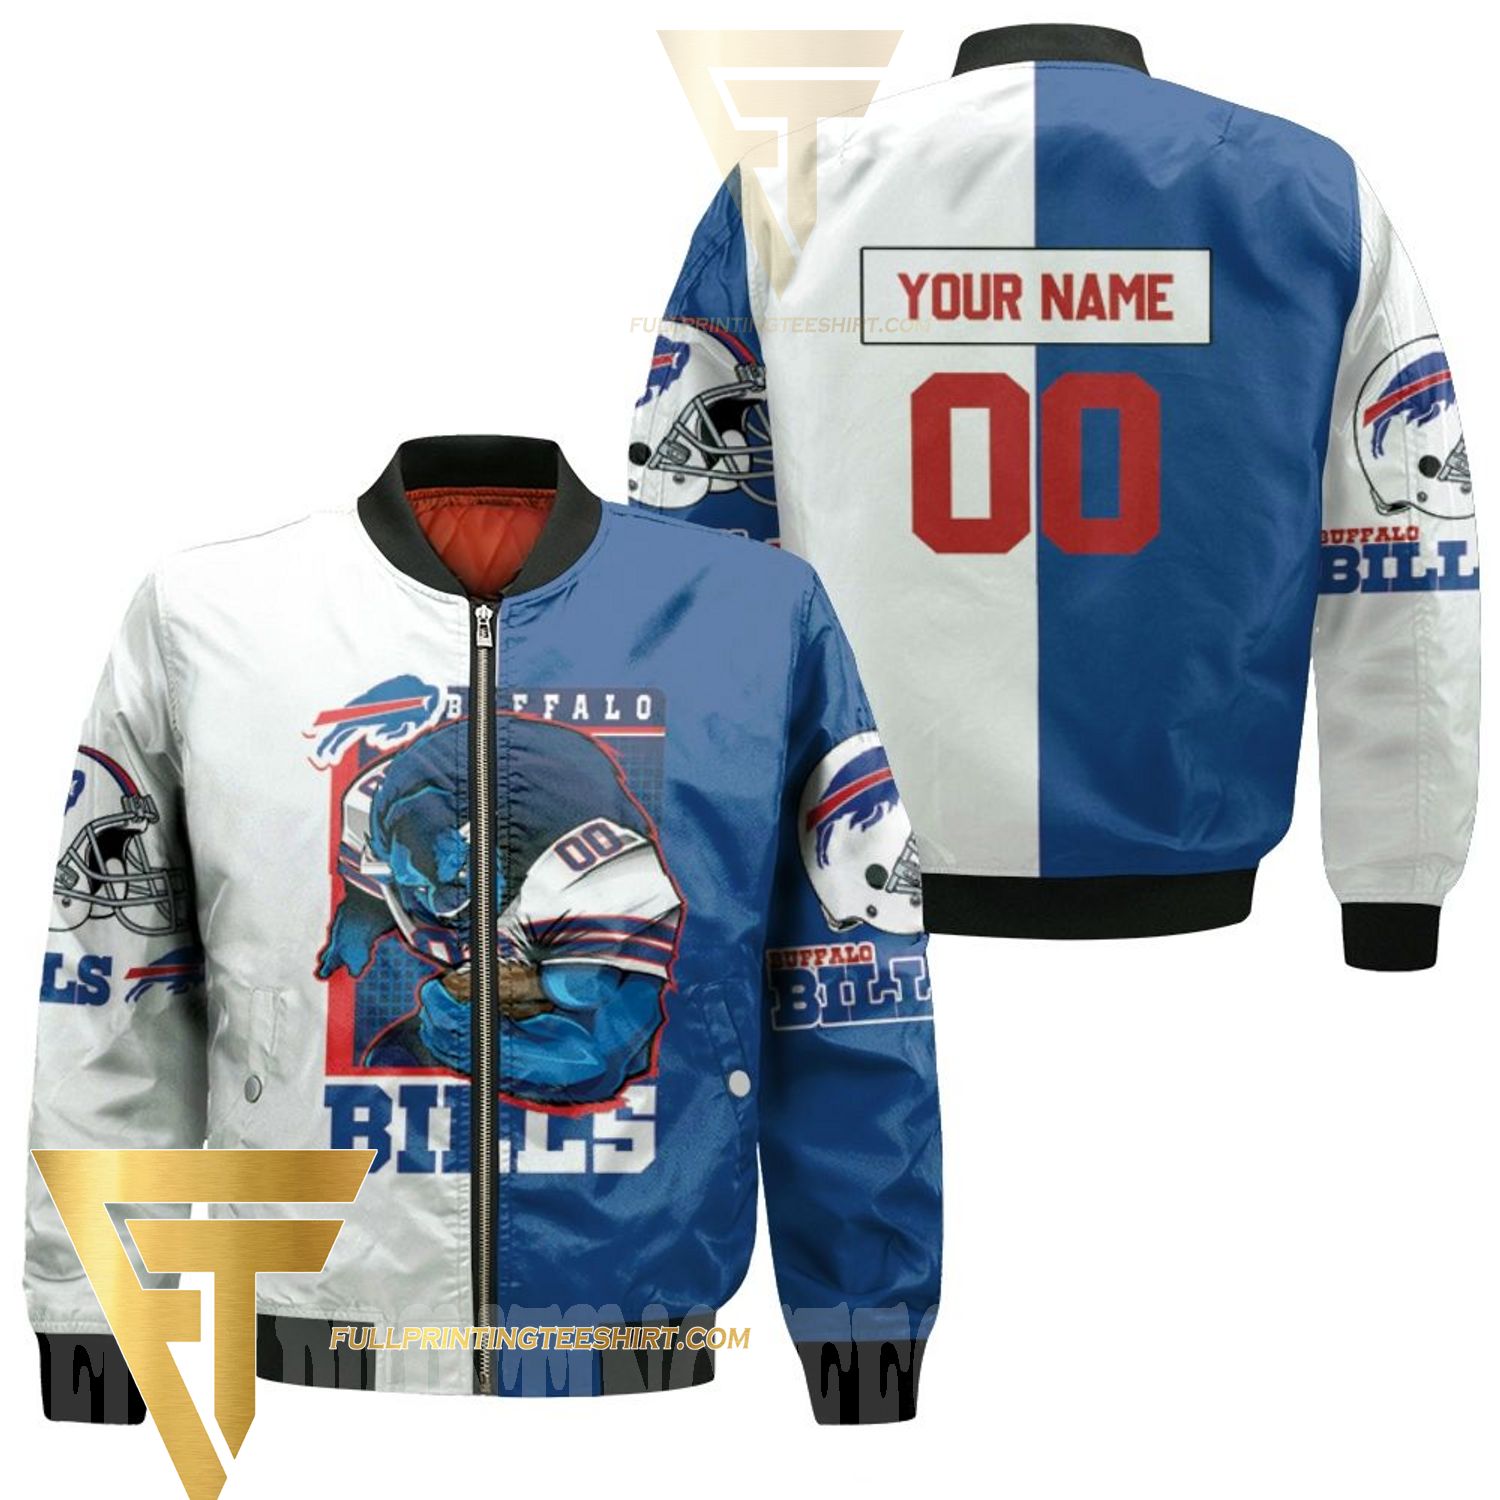 New-Buffalo-Bills-Mascot-2020-Afc-East-Champions-Personalized-Bomber-Jacket